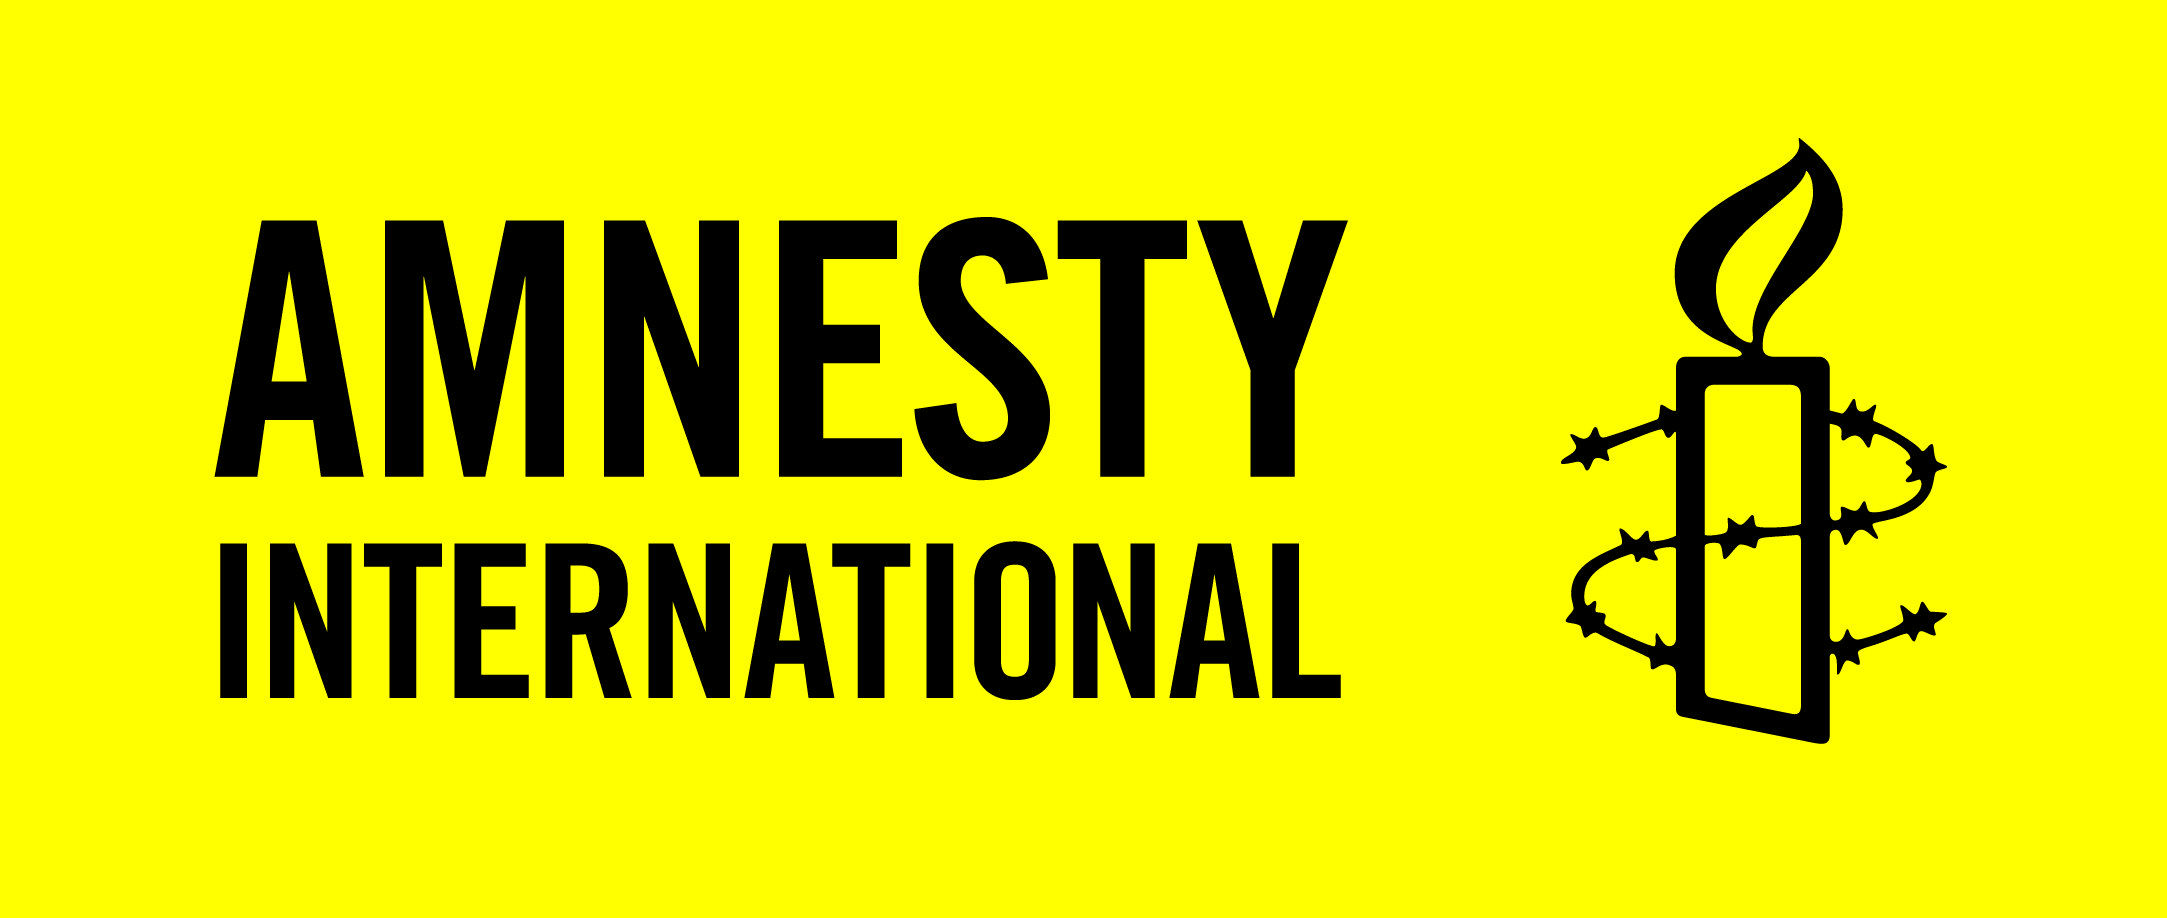 . Hdpng.com Amnesty Logo .jpg (Cmyk For Print Use, 800Kb) Hdpng.com  - Amnesty International, Transparent background PNG HD thumbnail